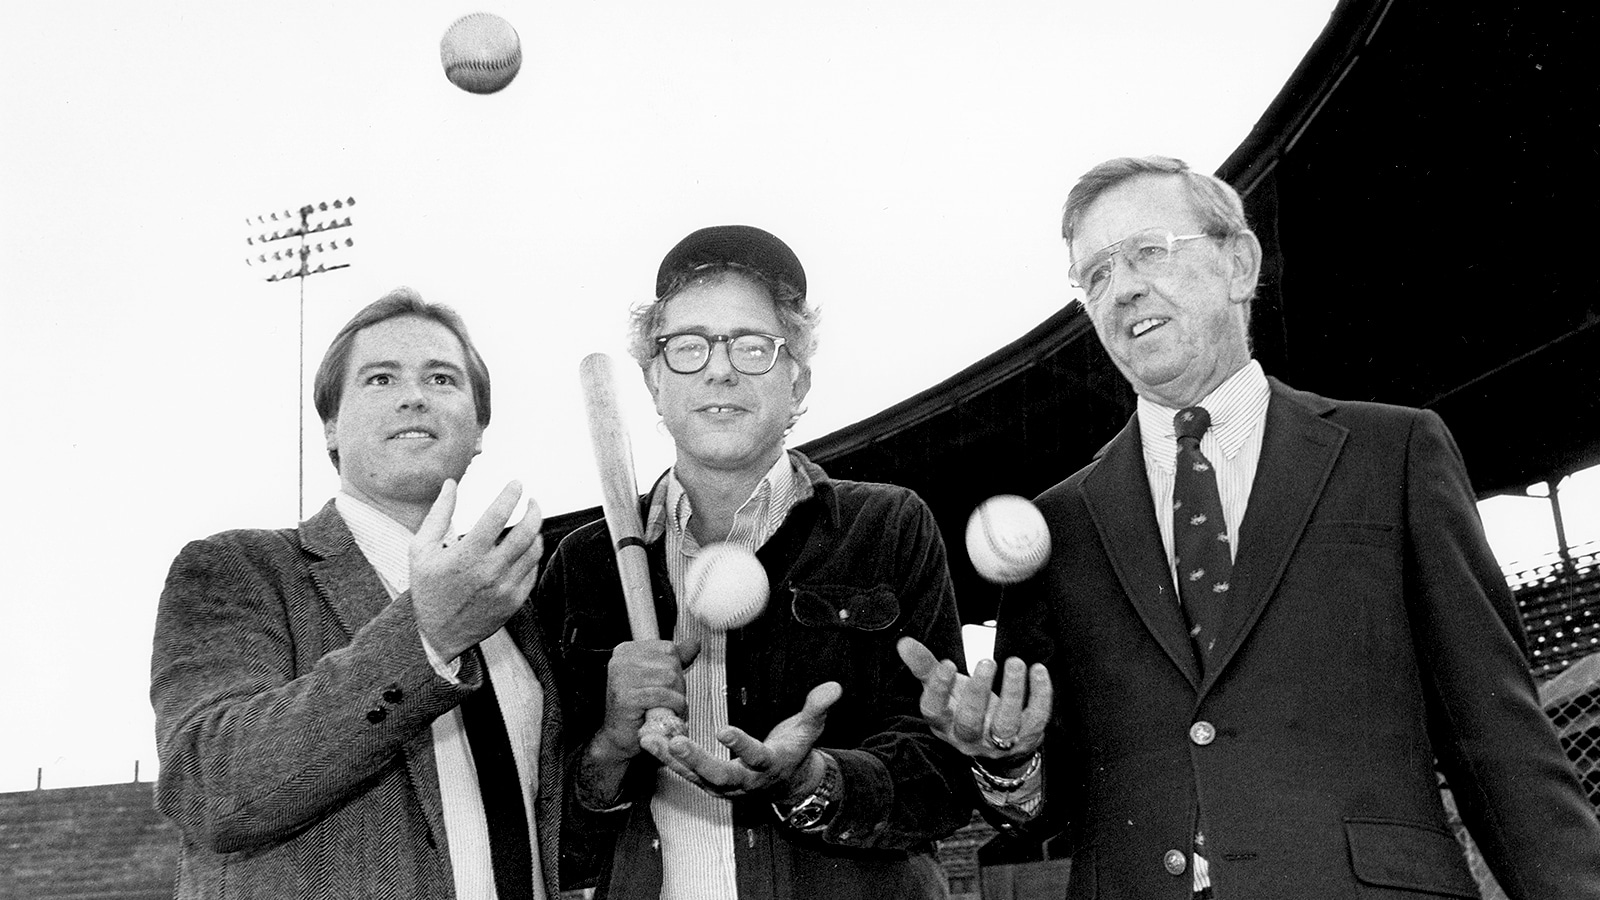 Mayor Bernie Sanders Brings Minor League Baseball To Burlington